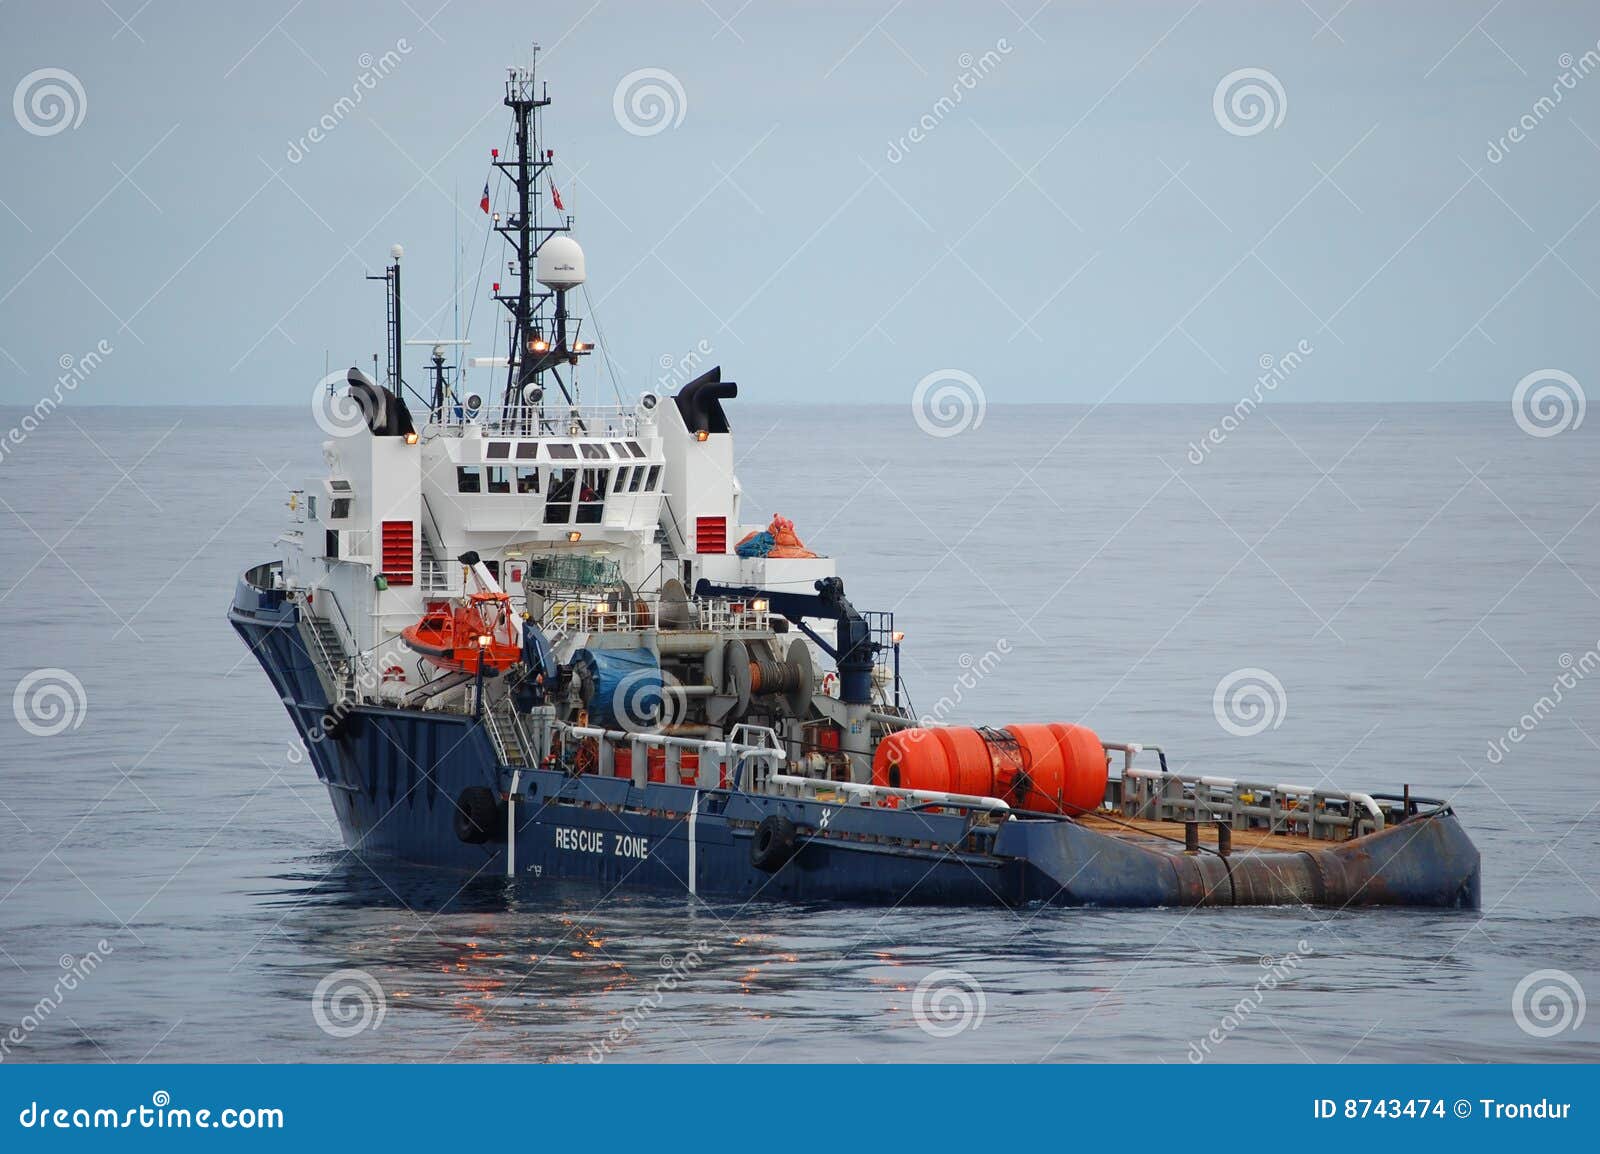 anchor handling tug supply vessel ahts